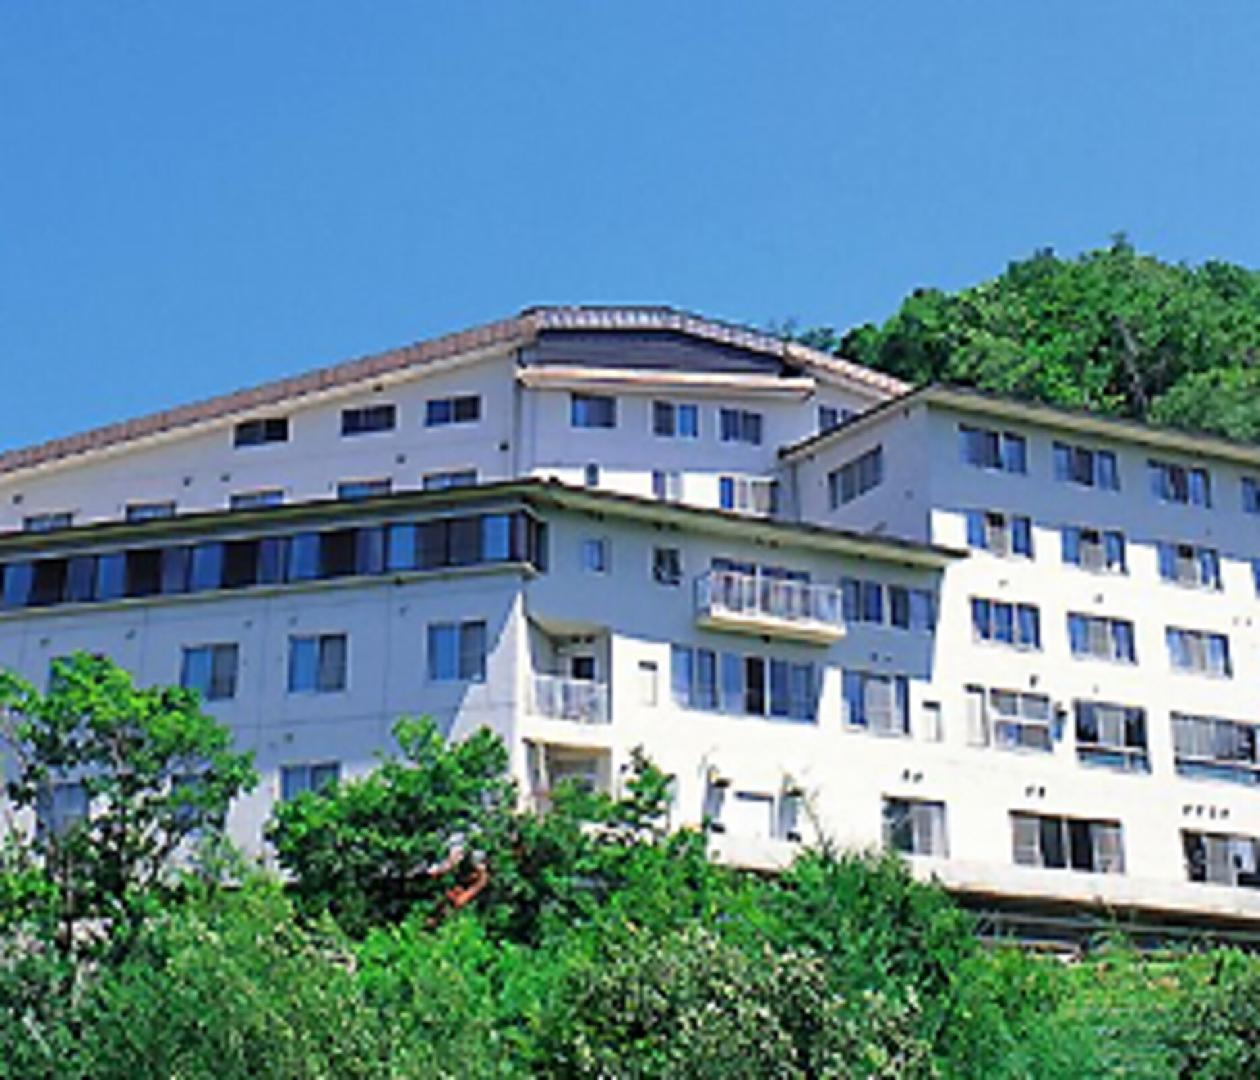 Hotel Higashidate